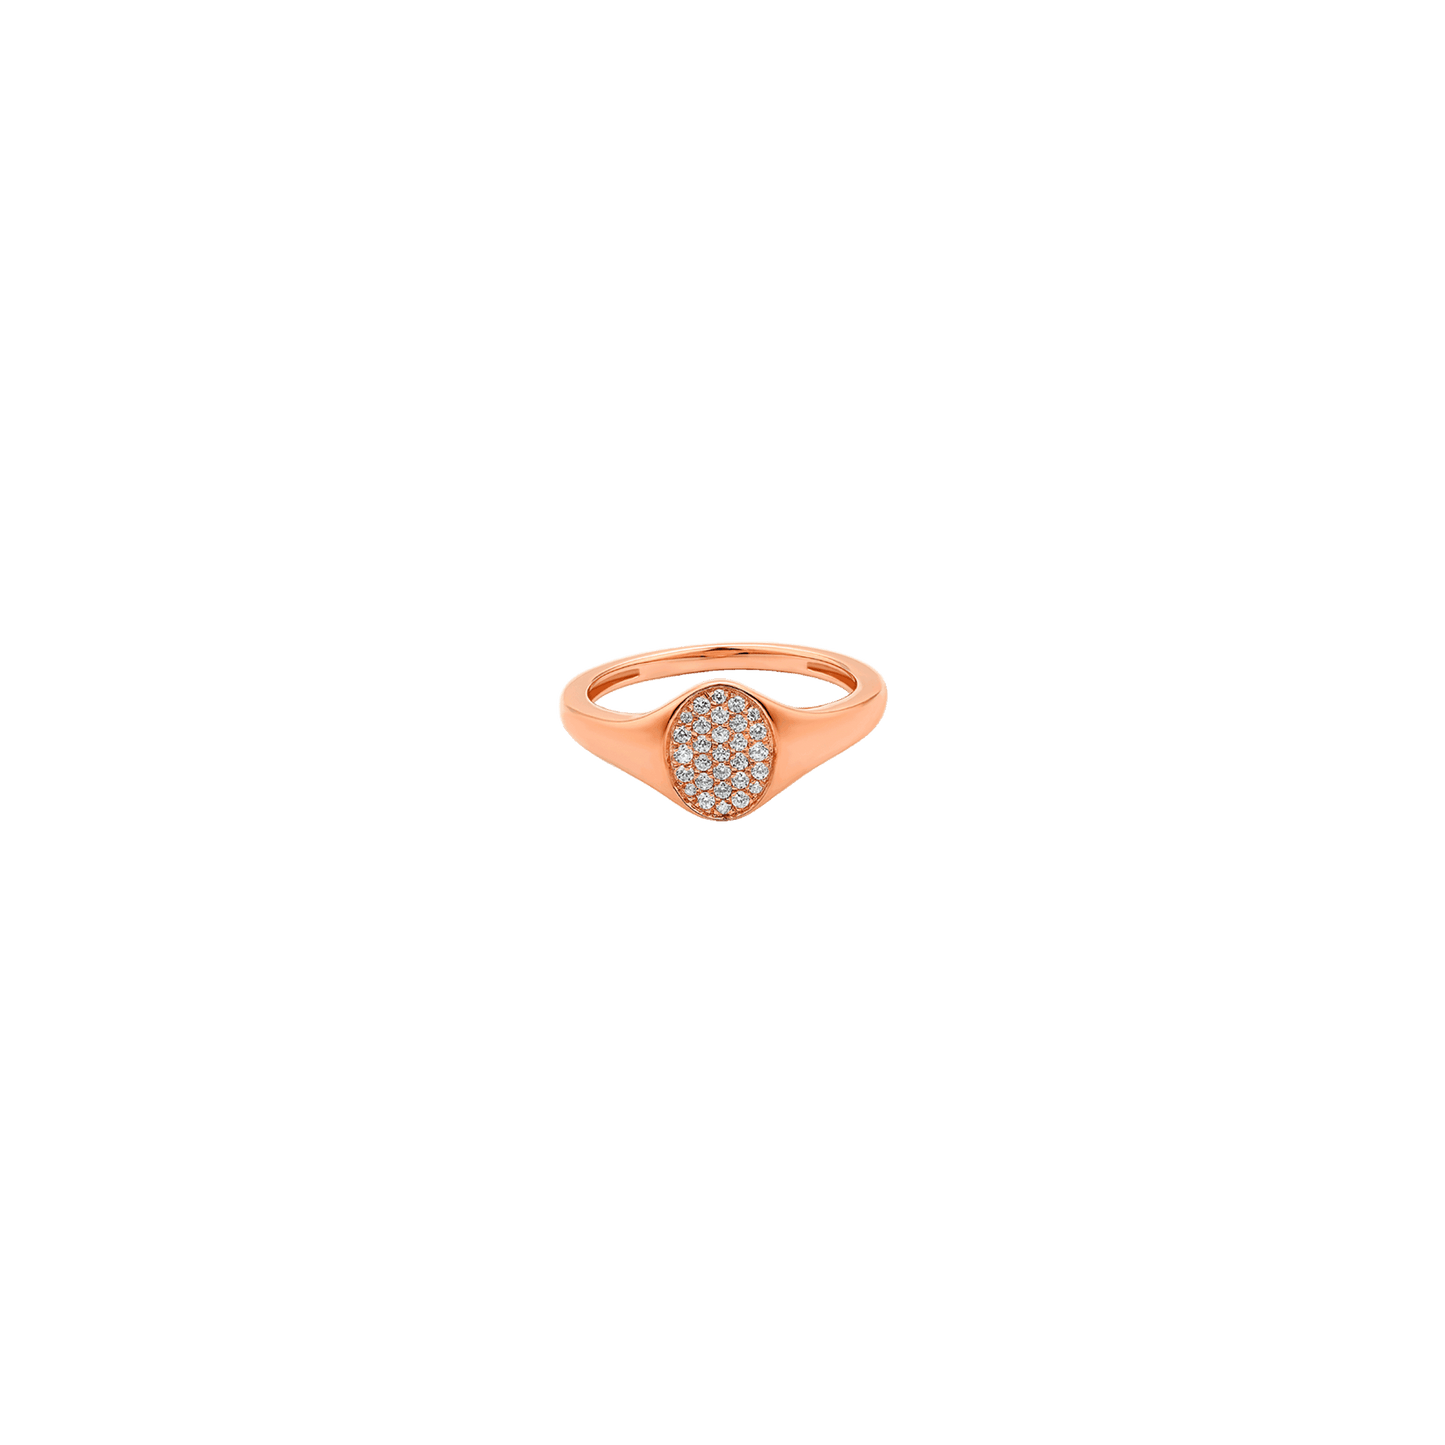 Oval Signet Diamond Ring - 14K Rose Gold Rings 14K Solid Gold US 4 